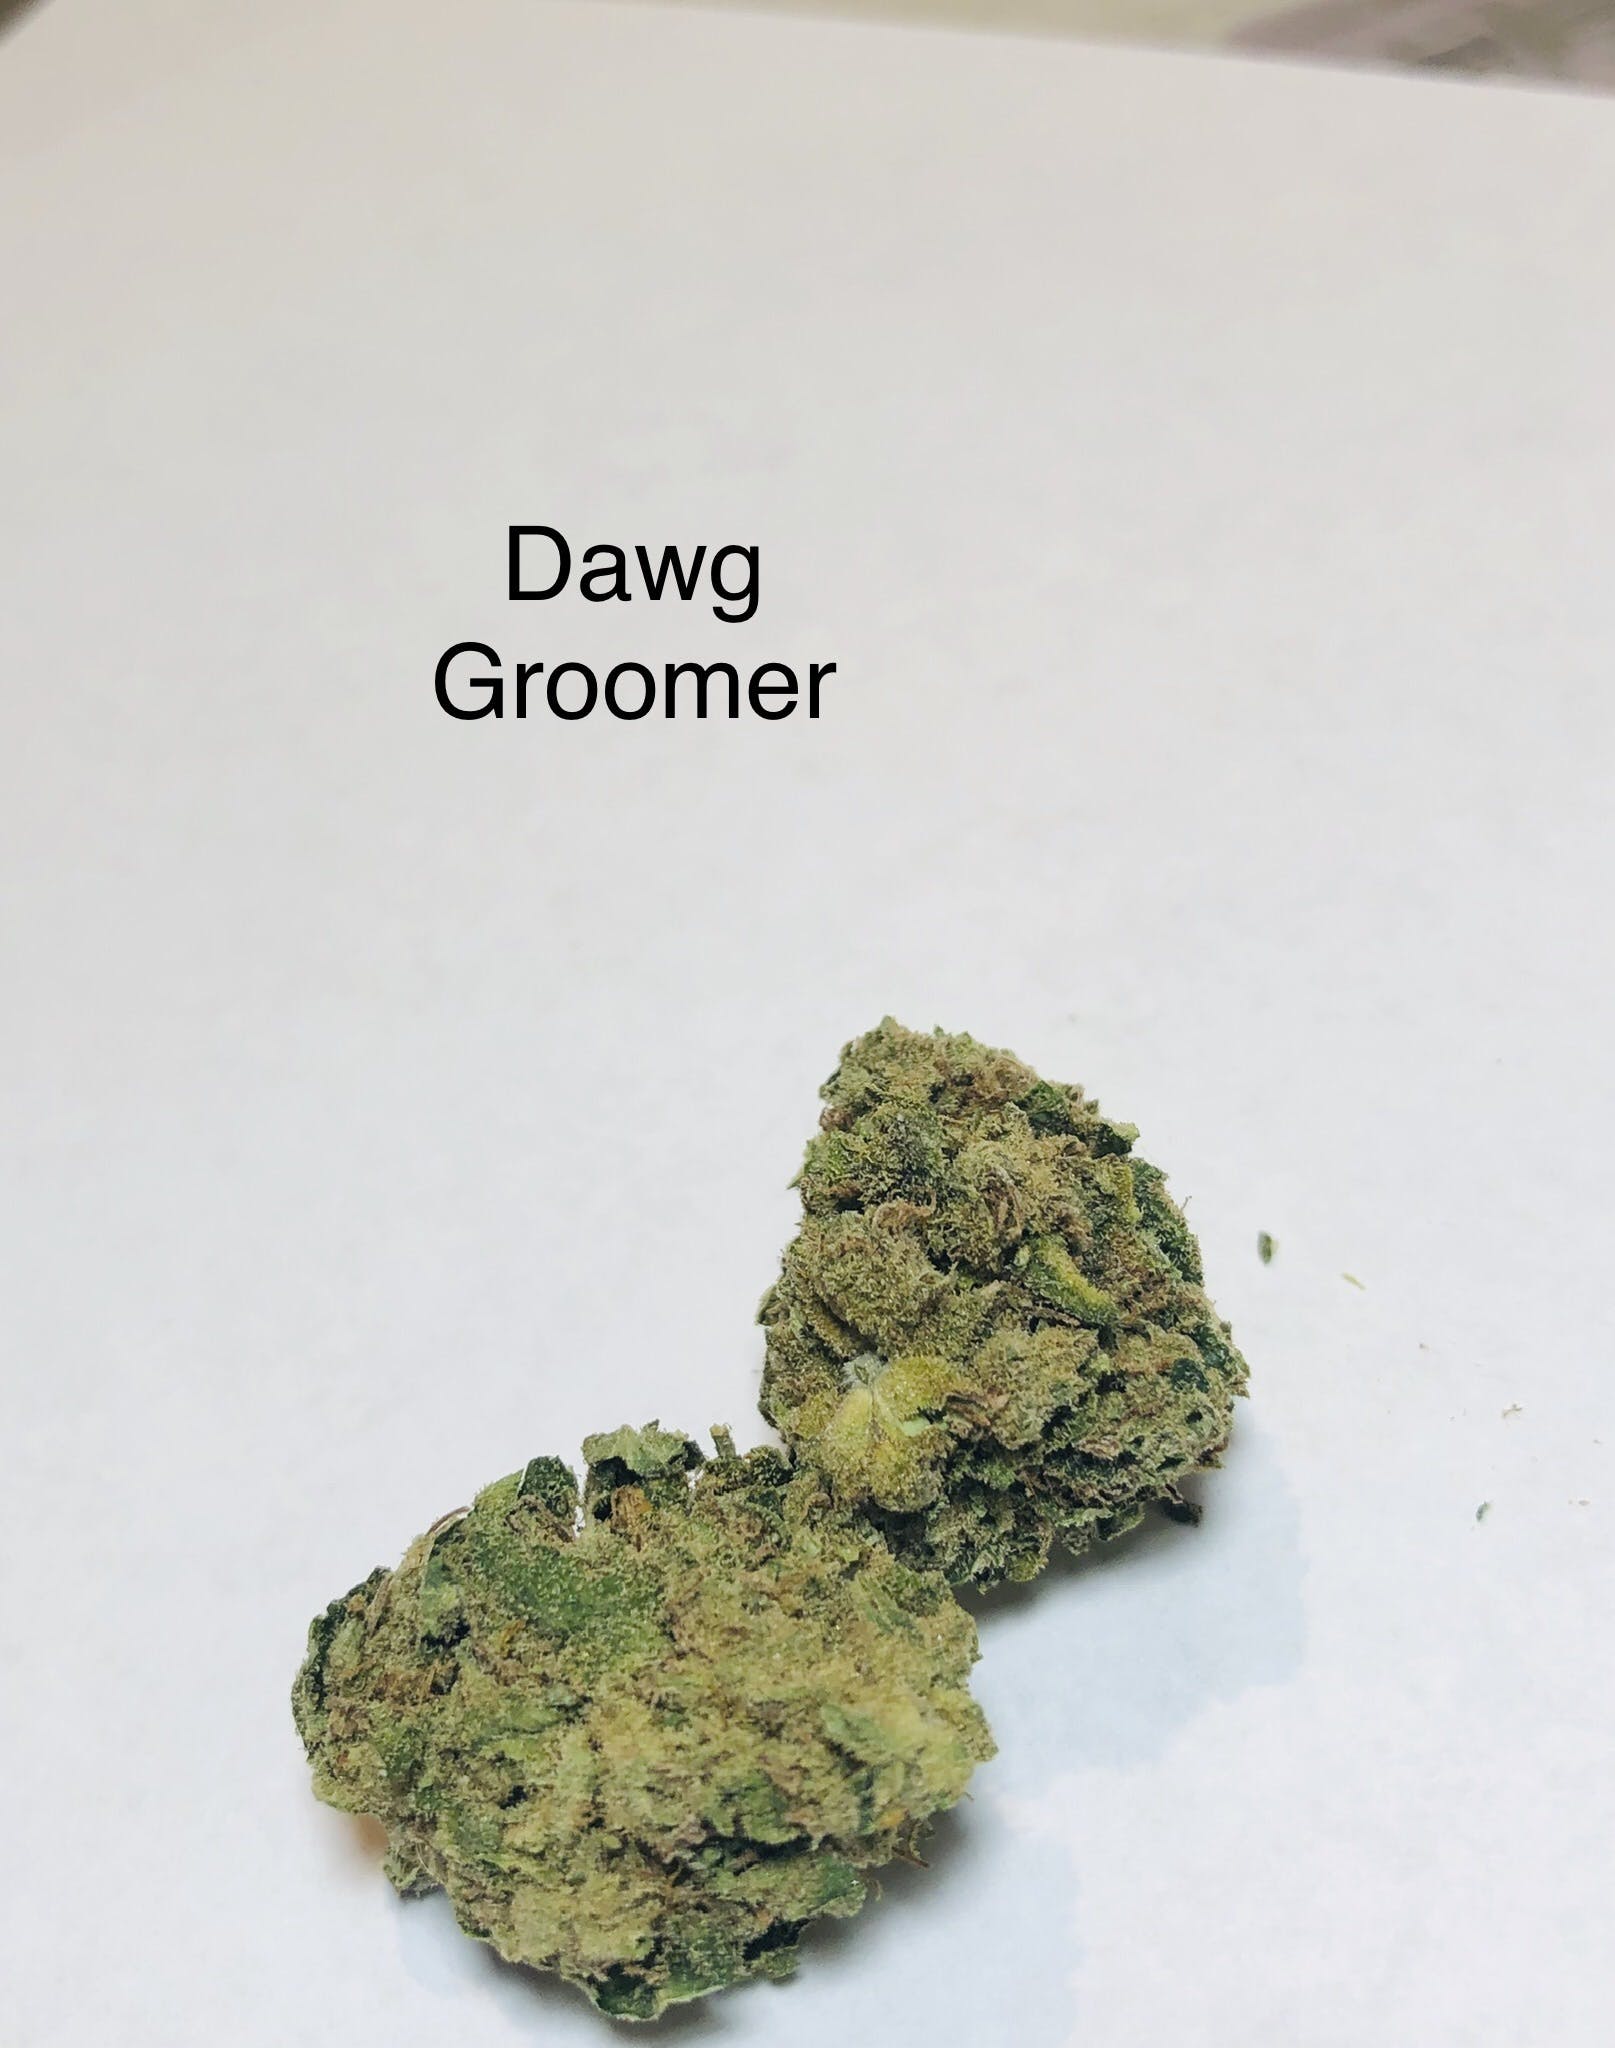 marijuana-dispensaries-the-green-source-lll-in-colorado-springs-dawg-groomer